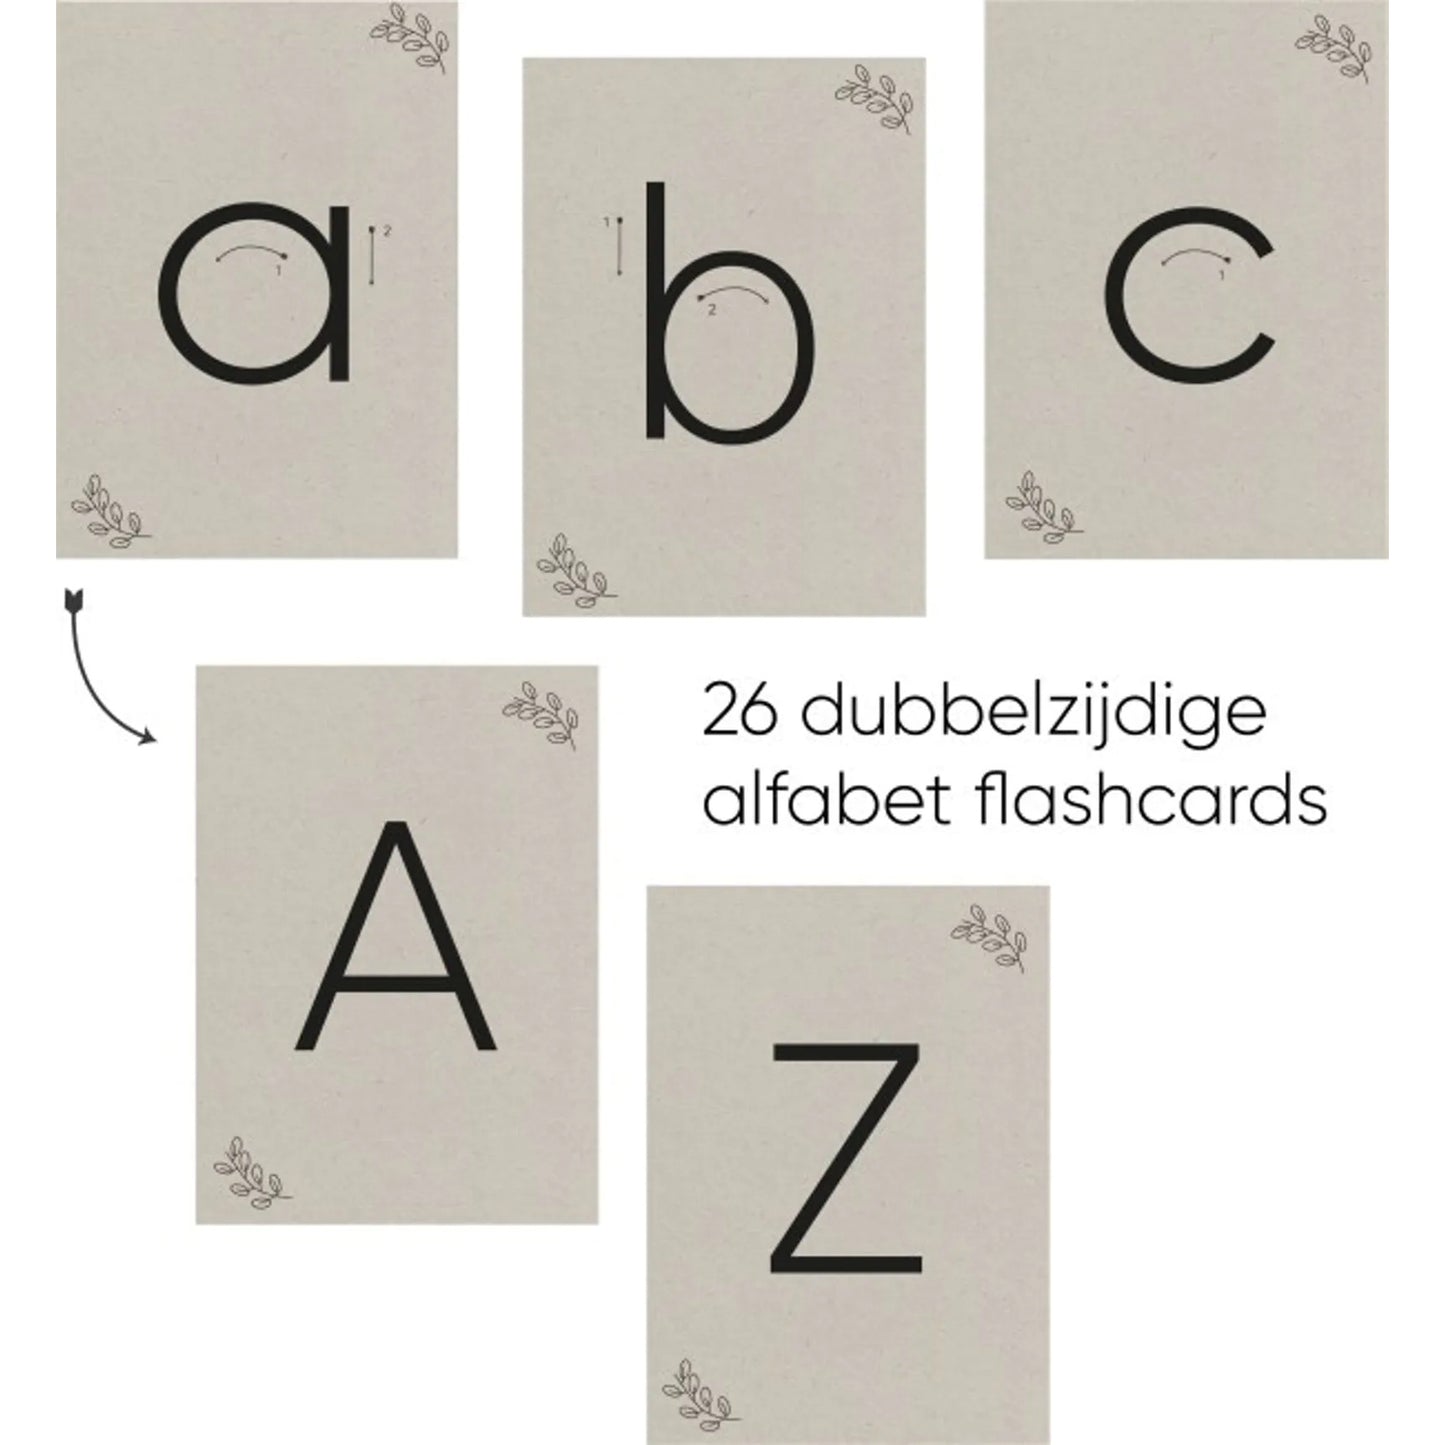 Alfabet flashcards